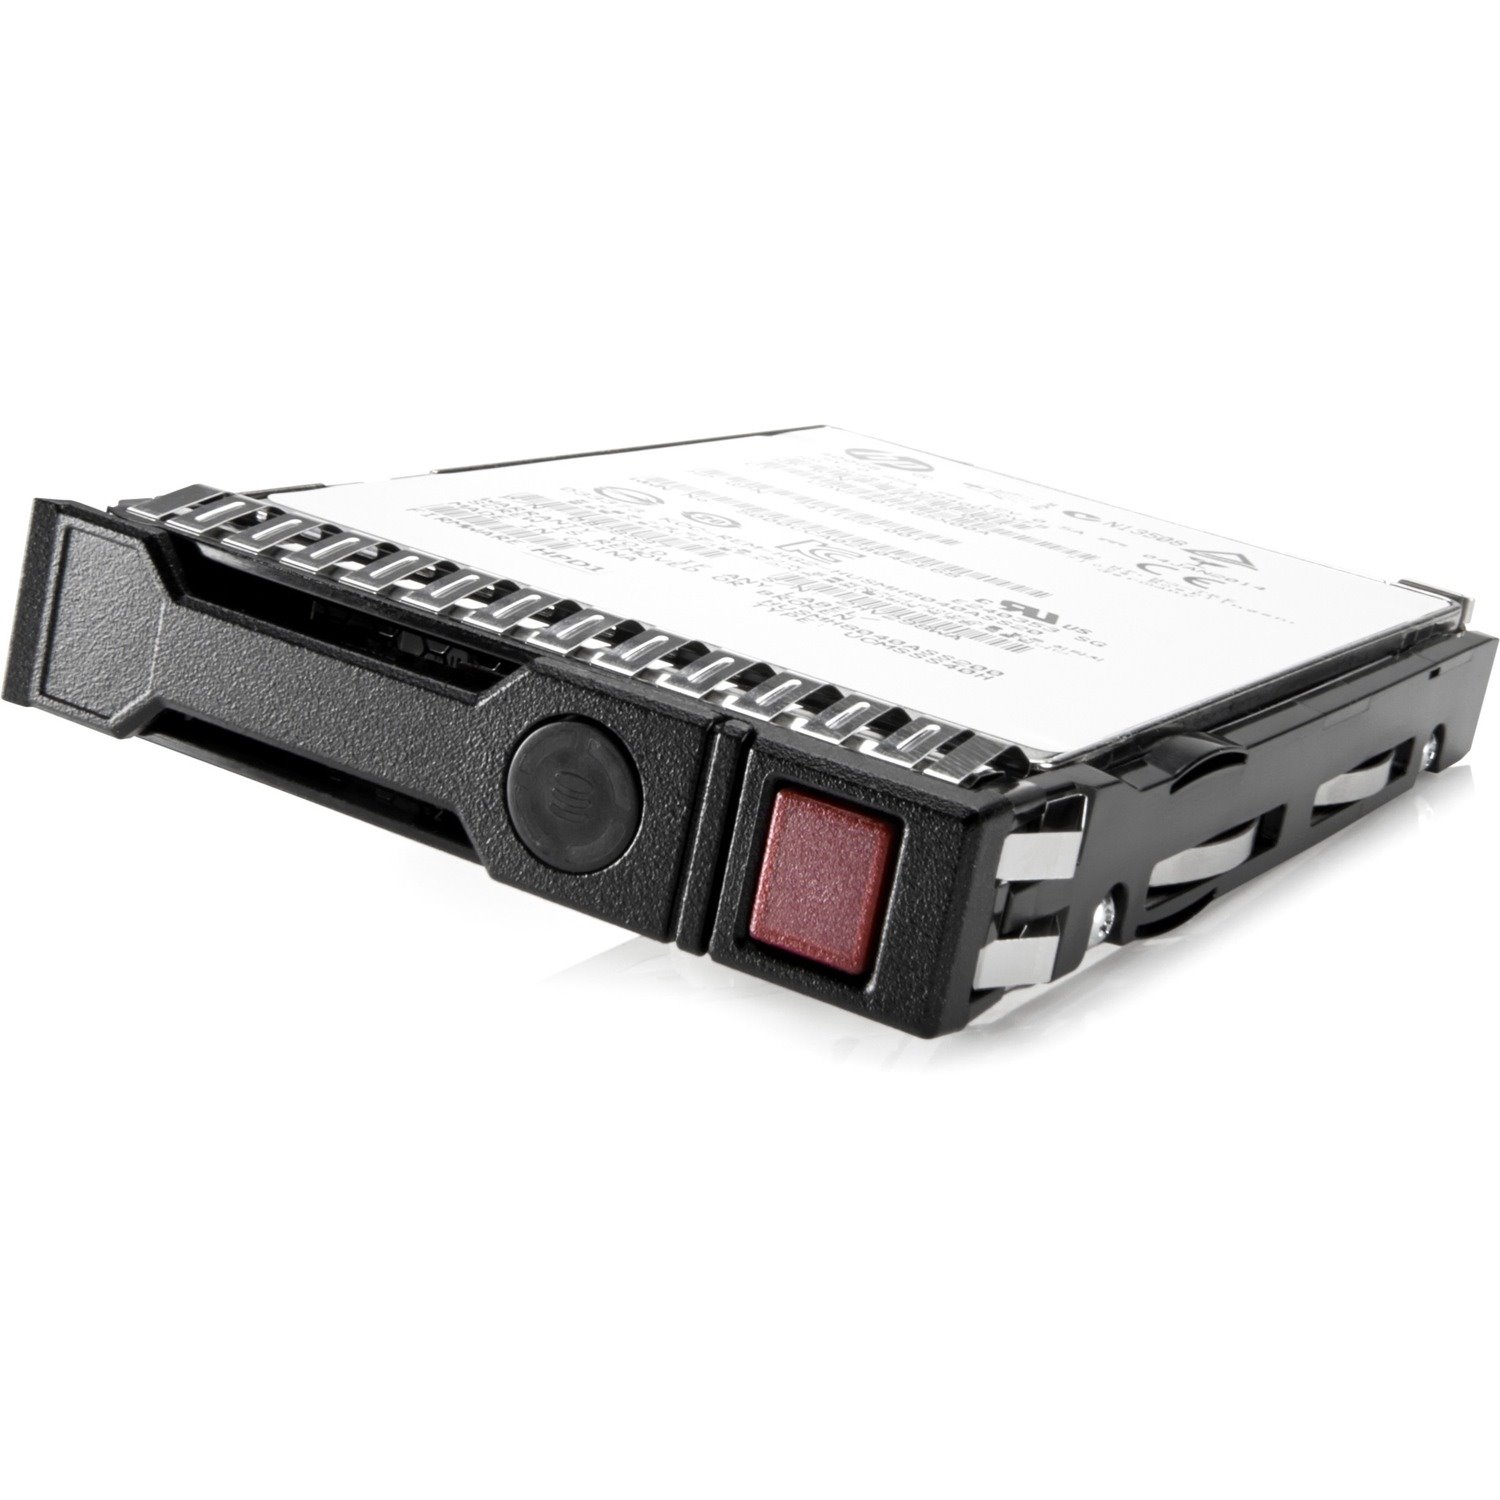 HPE Sourcing 300 GB Hard Drive - 2.5" Internal - SAS (12Gb/s SAS)